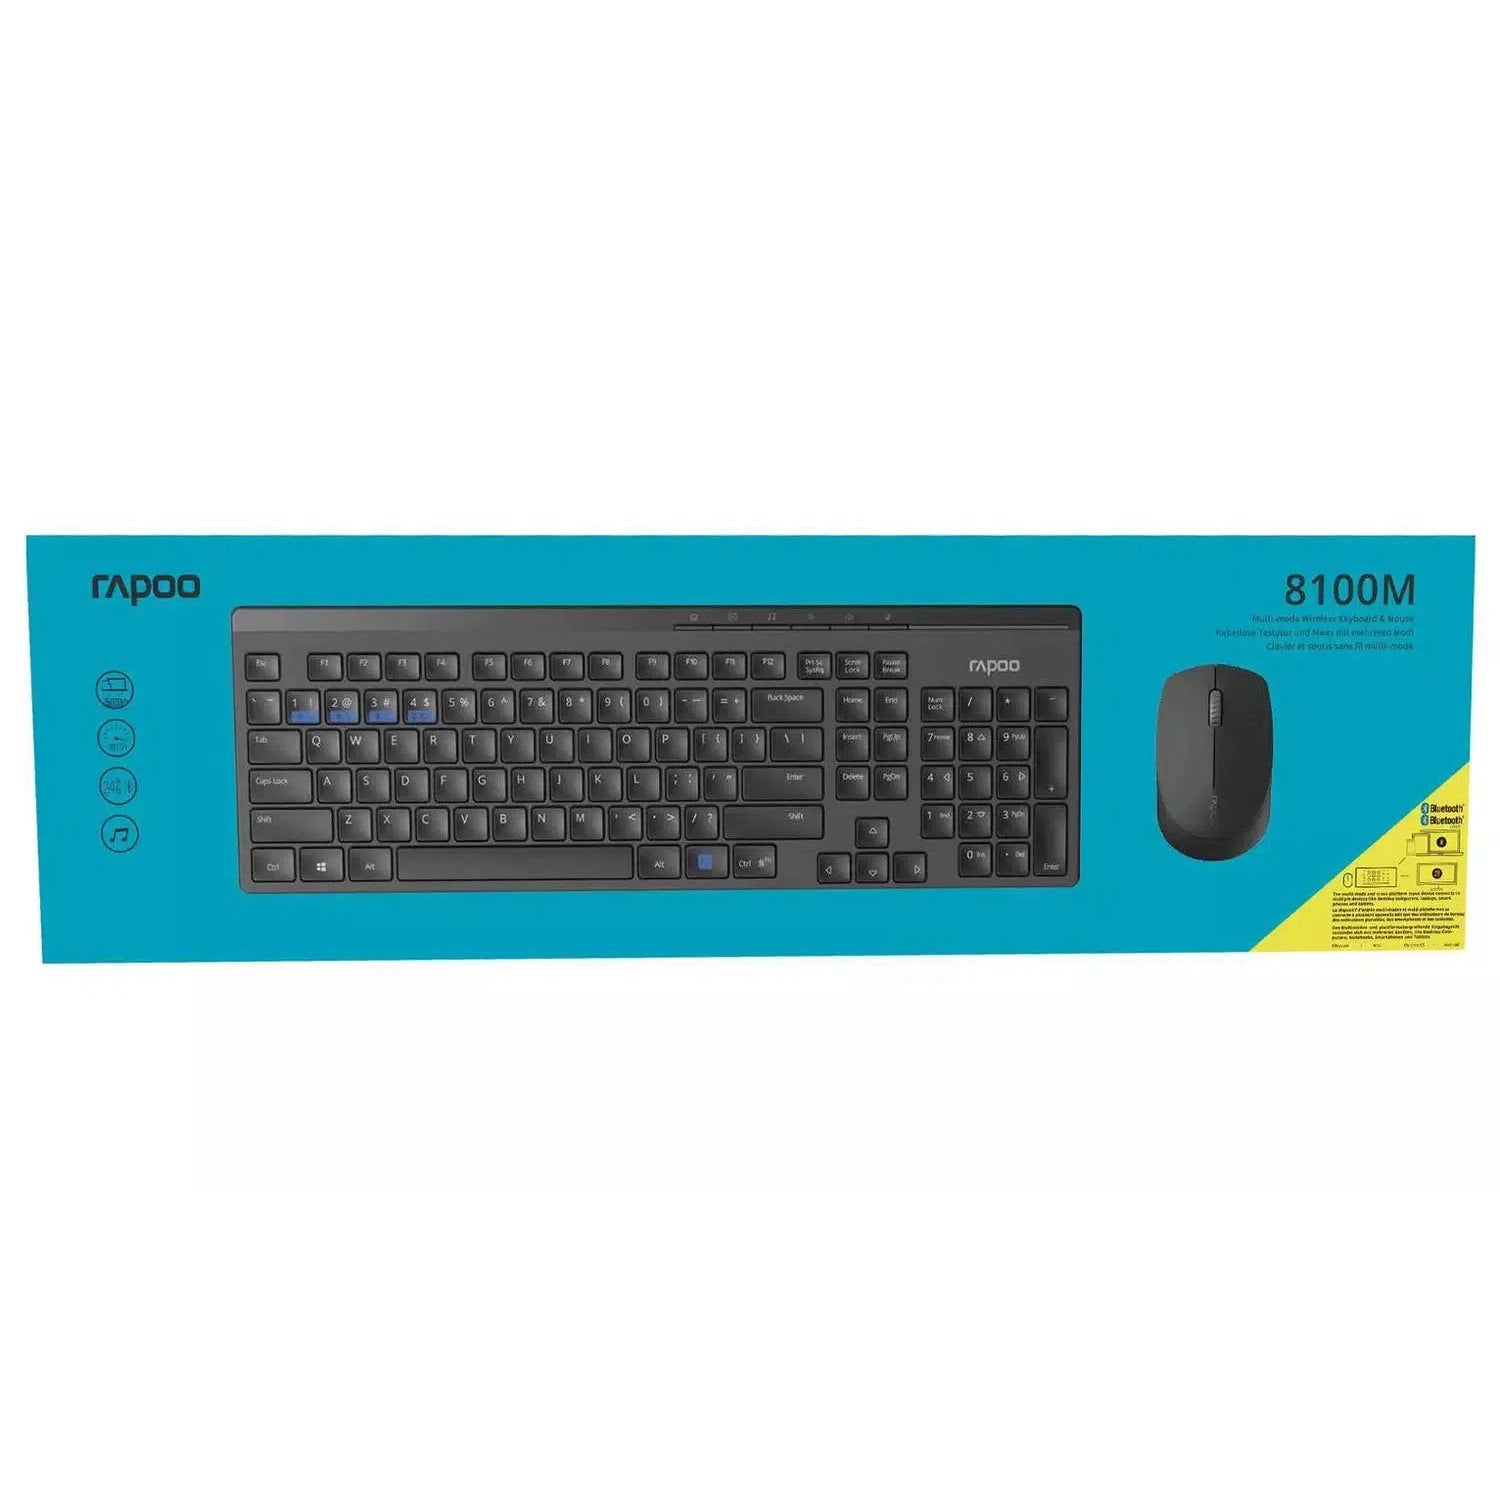 Rapoo 8100M Multi-Mode Wireless Mouse and Keyboard, Black - Refurbished Pristine